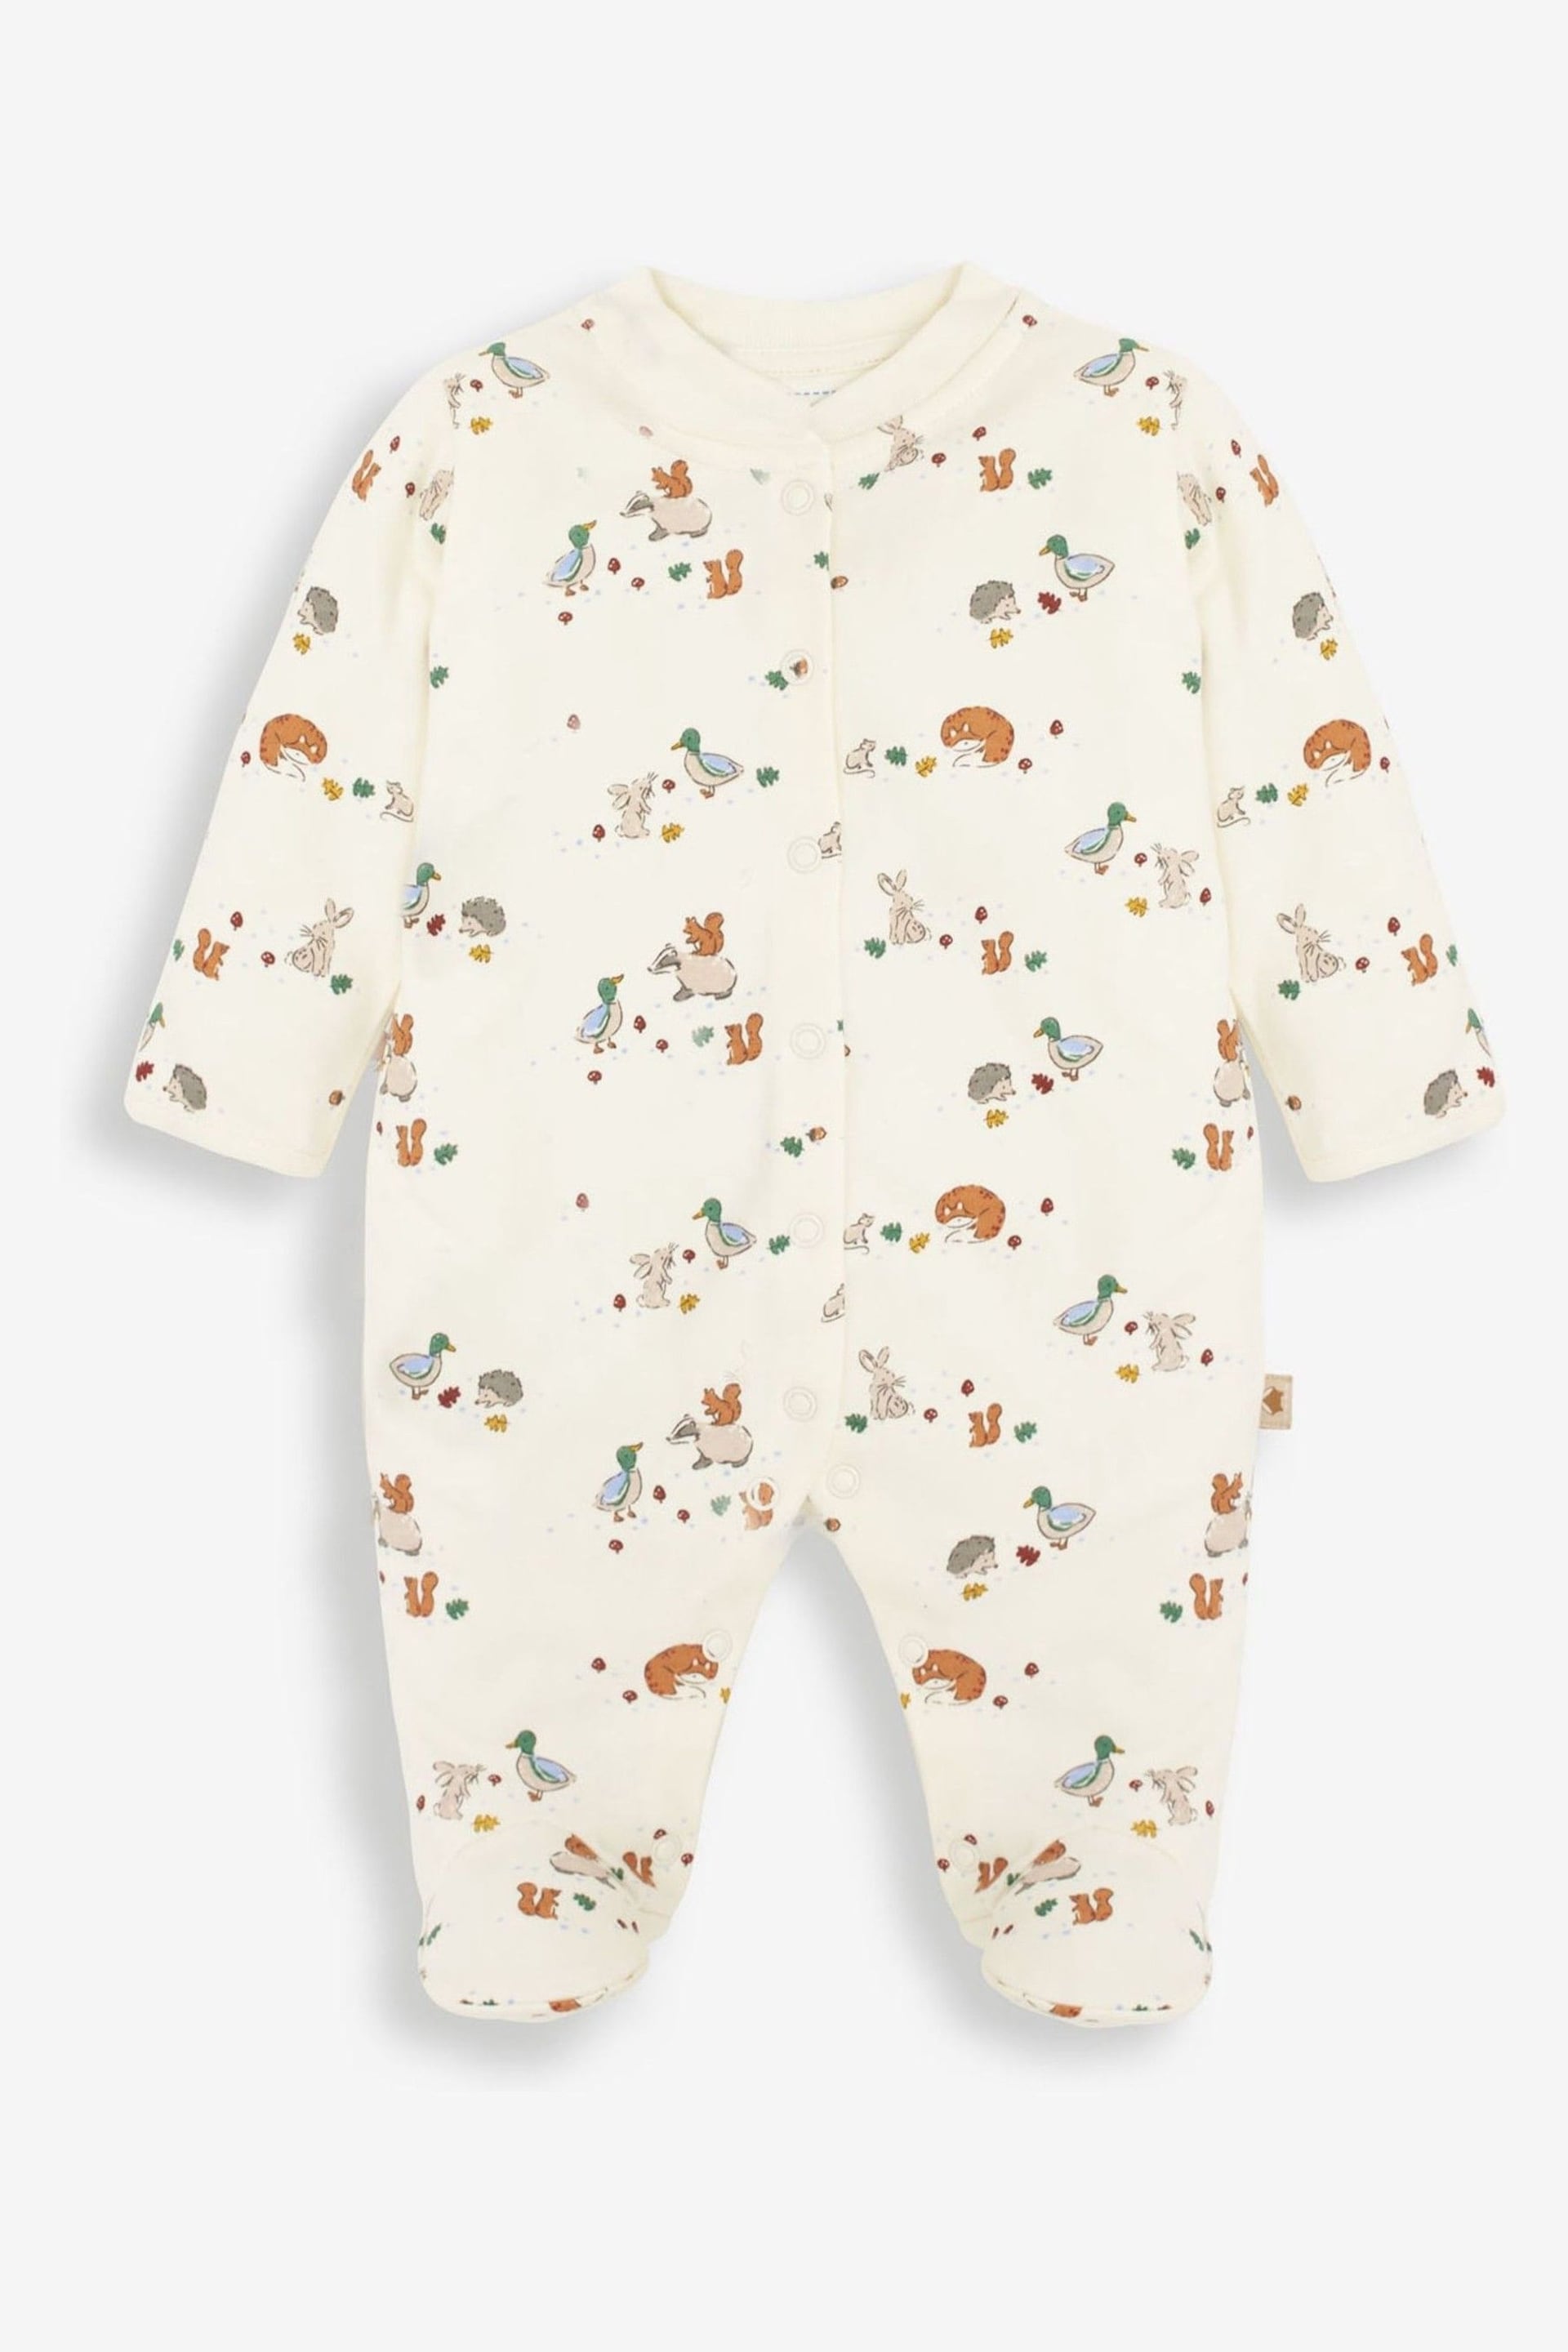 JoJo Maman Bébé Indigo 2-Piece Woodland Sleepsuit & Embroidered Pocket Jacket Set - Image 2 of 5